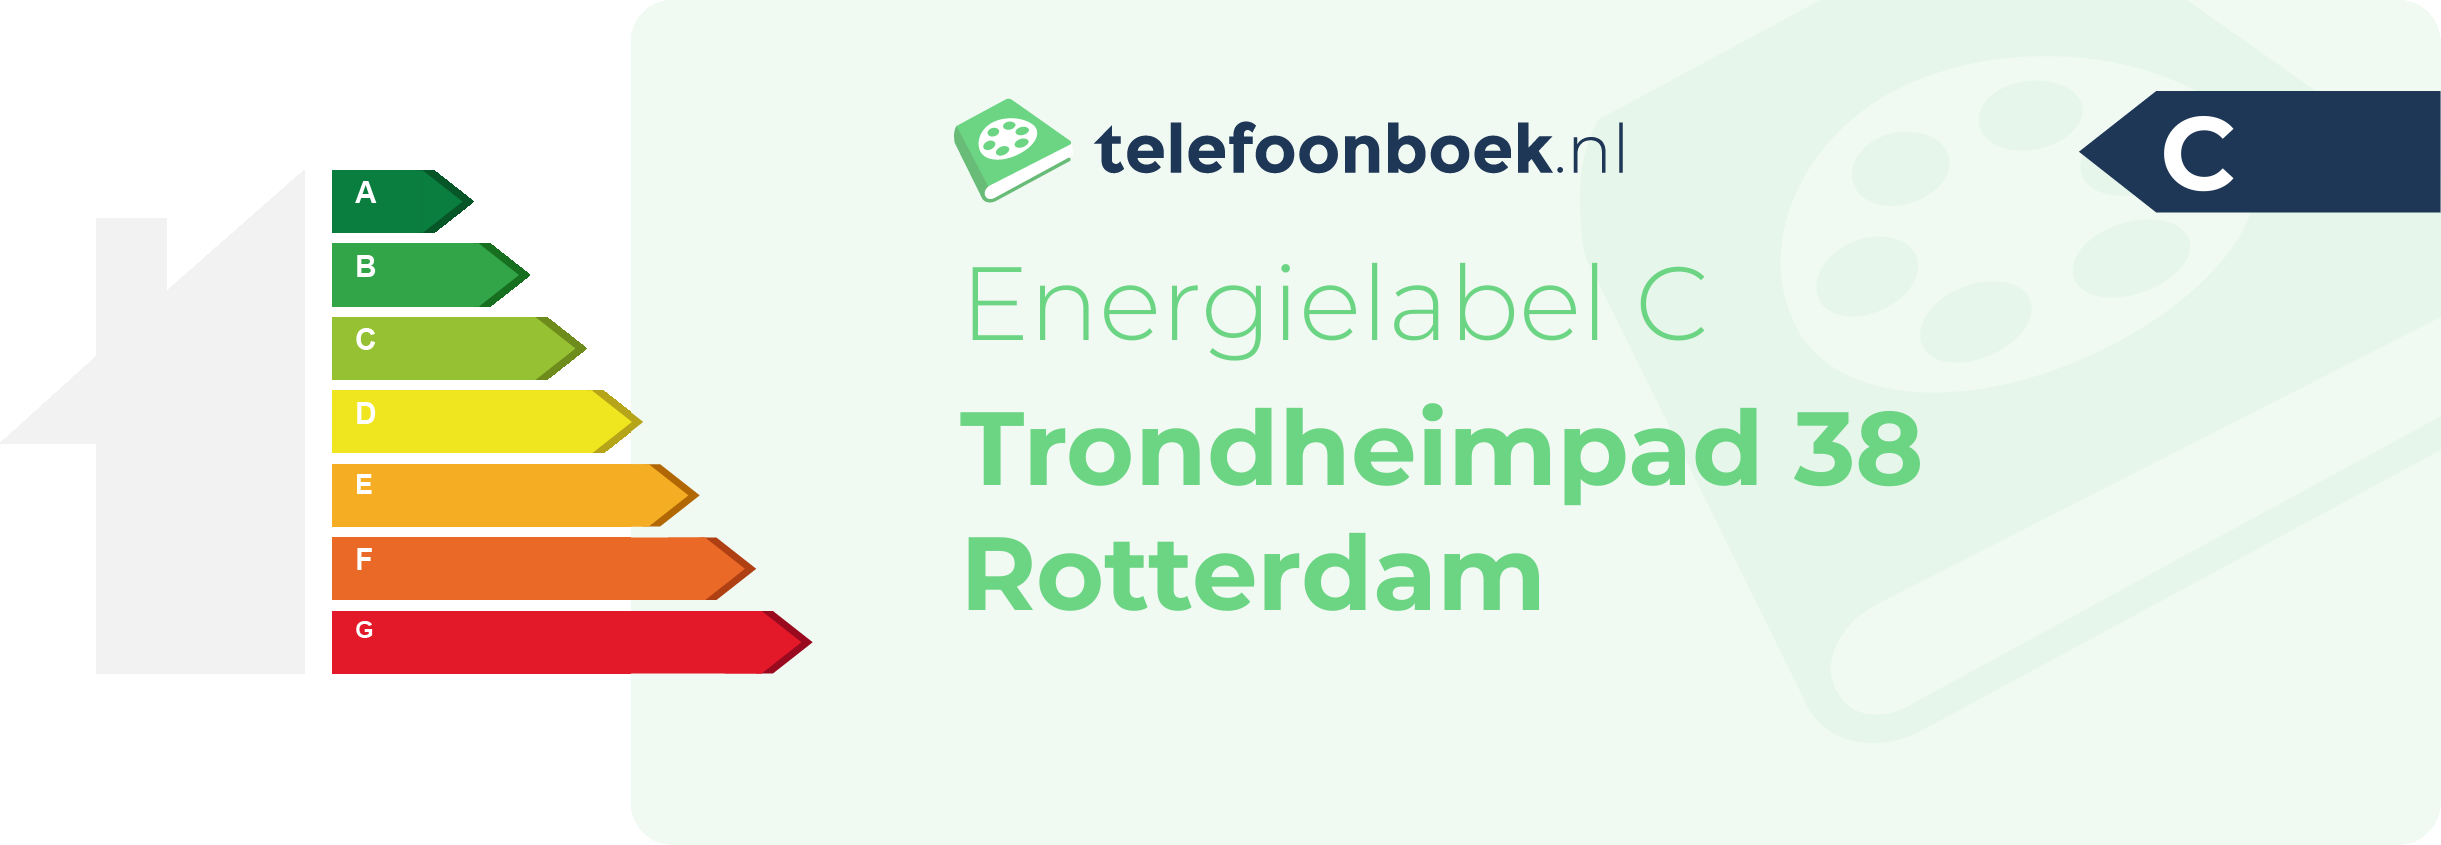 Energielabel Trondheimpad 38 Rotterdam